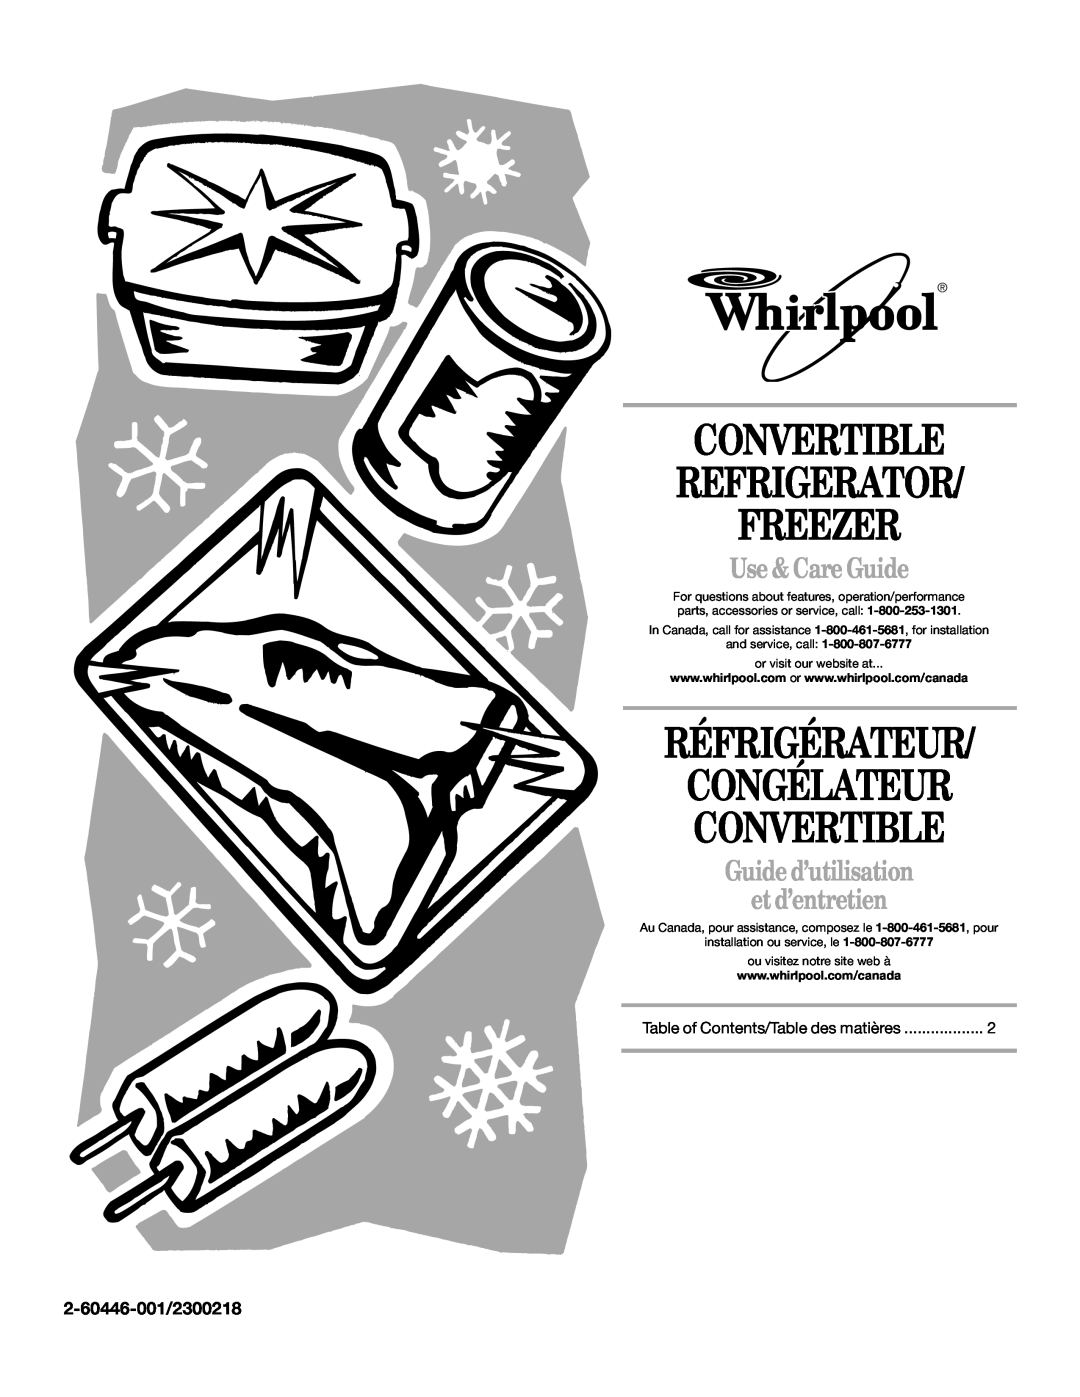 Whirlpool EL7JWKLMQ00 manual Convertible Refrigerator Freezer, Réfrigérateur Congélateur Convertible, Use & Care Guide 